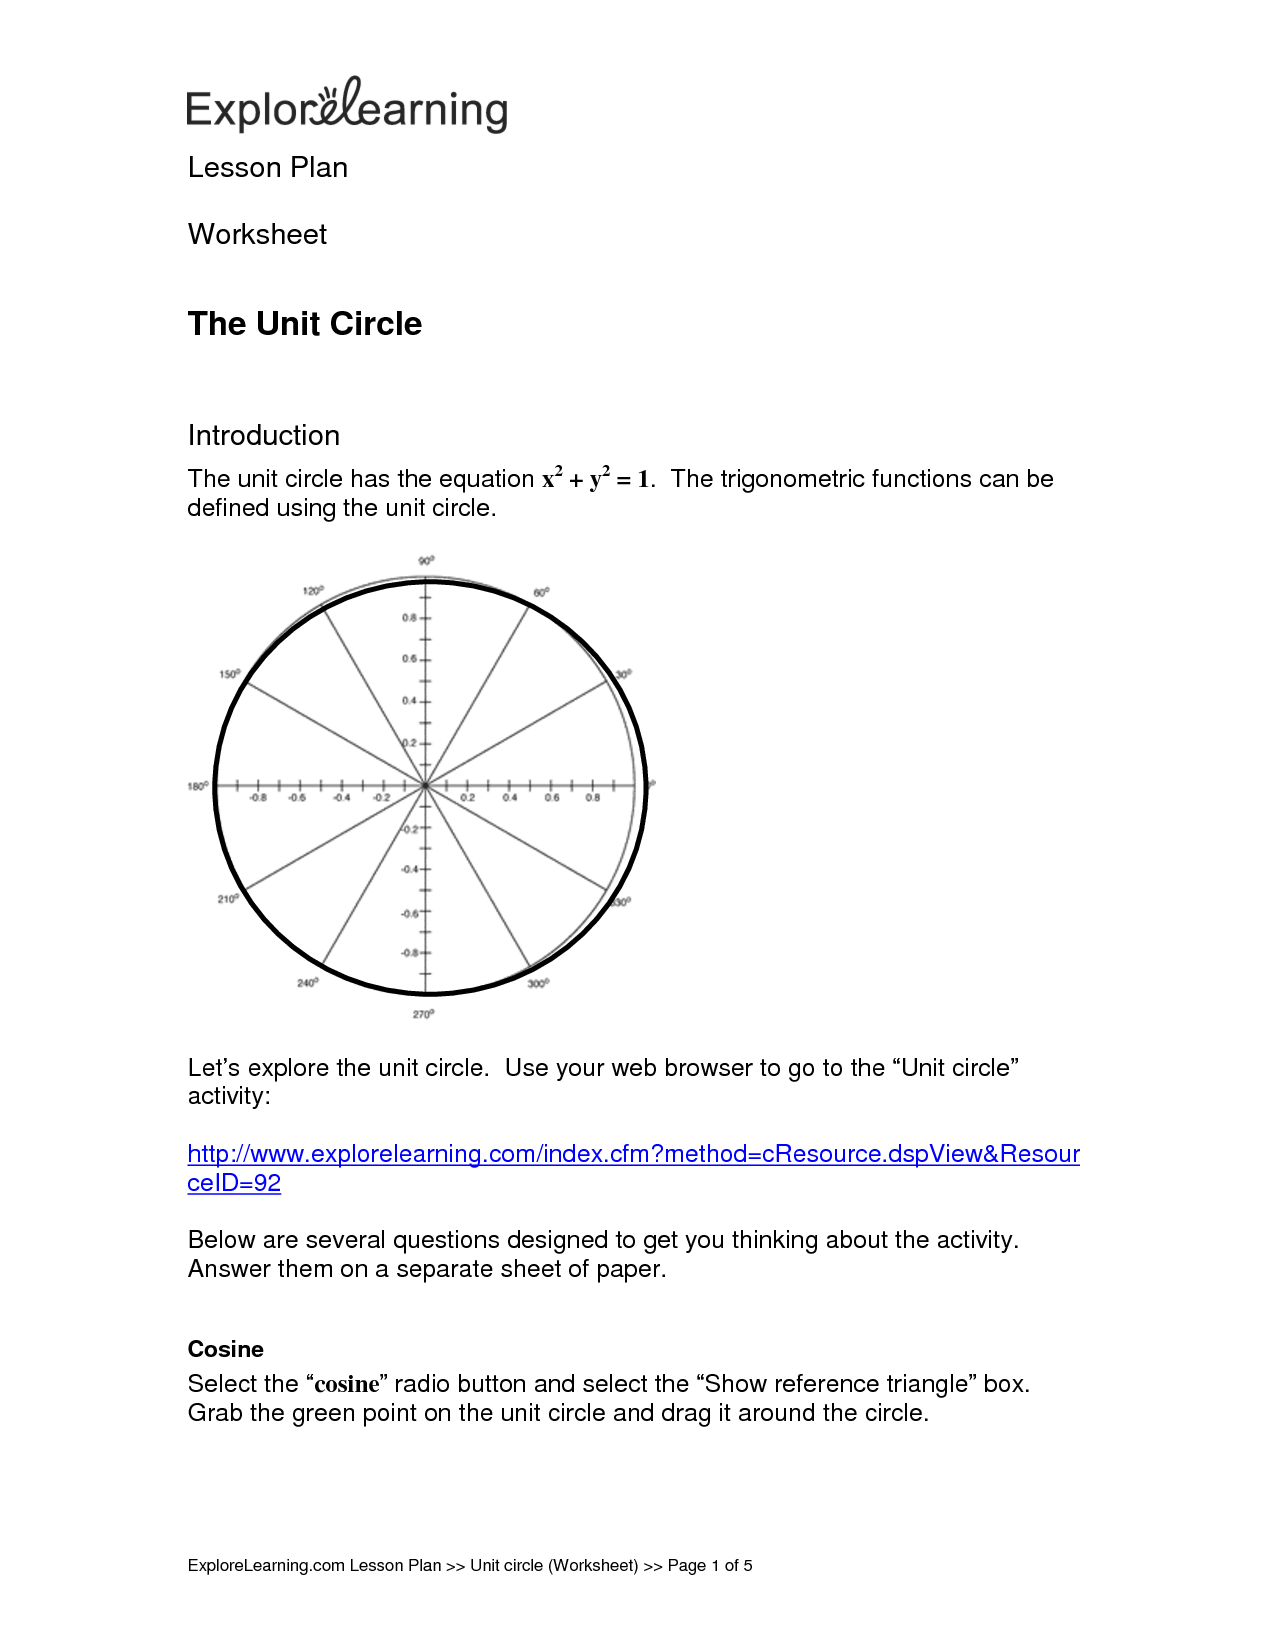 trigonometry-unit-circle-worksheet-answers